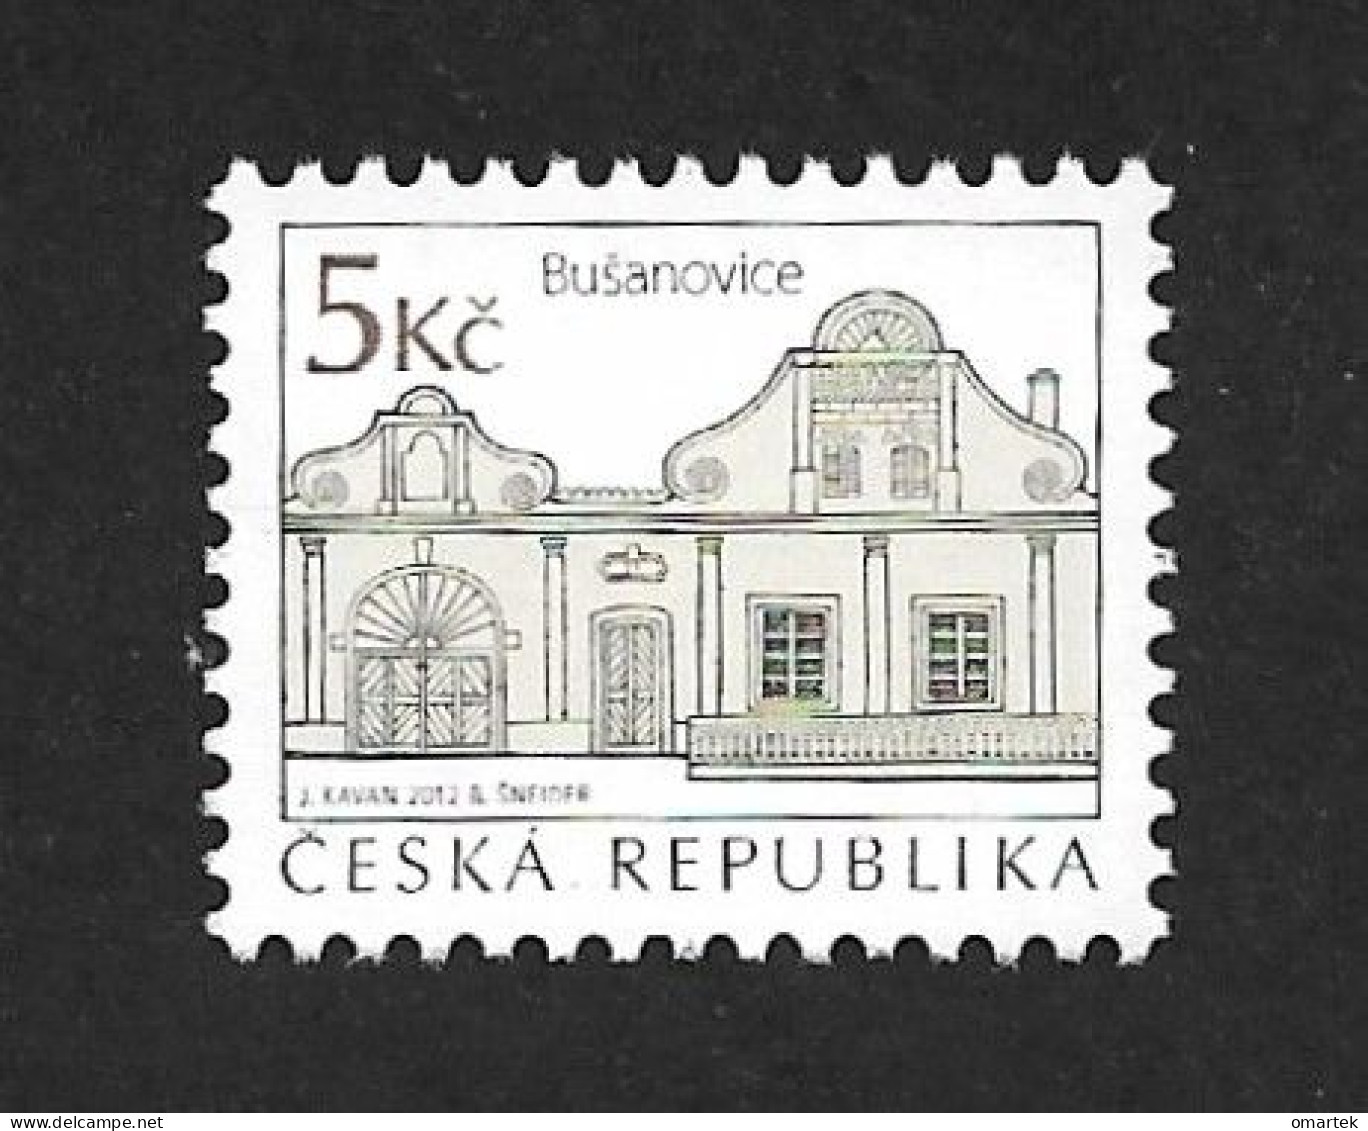 Czech Republic 2012 MNH ** Mi 753 Sc 3558 Folk Architecture - Busanovice.Tschechische Republik - Nuovi